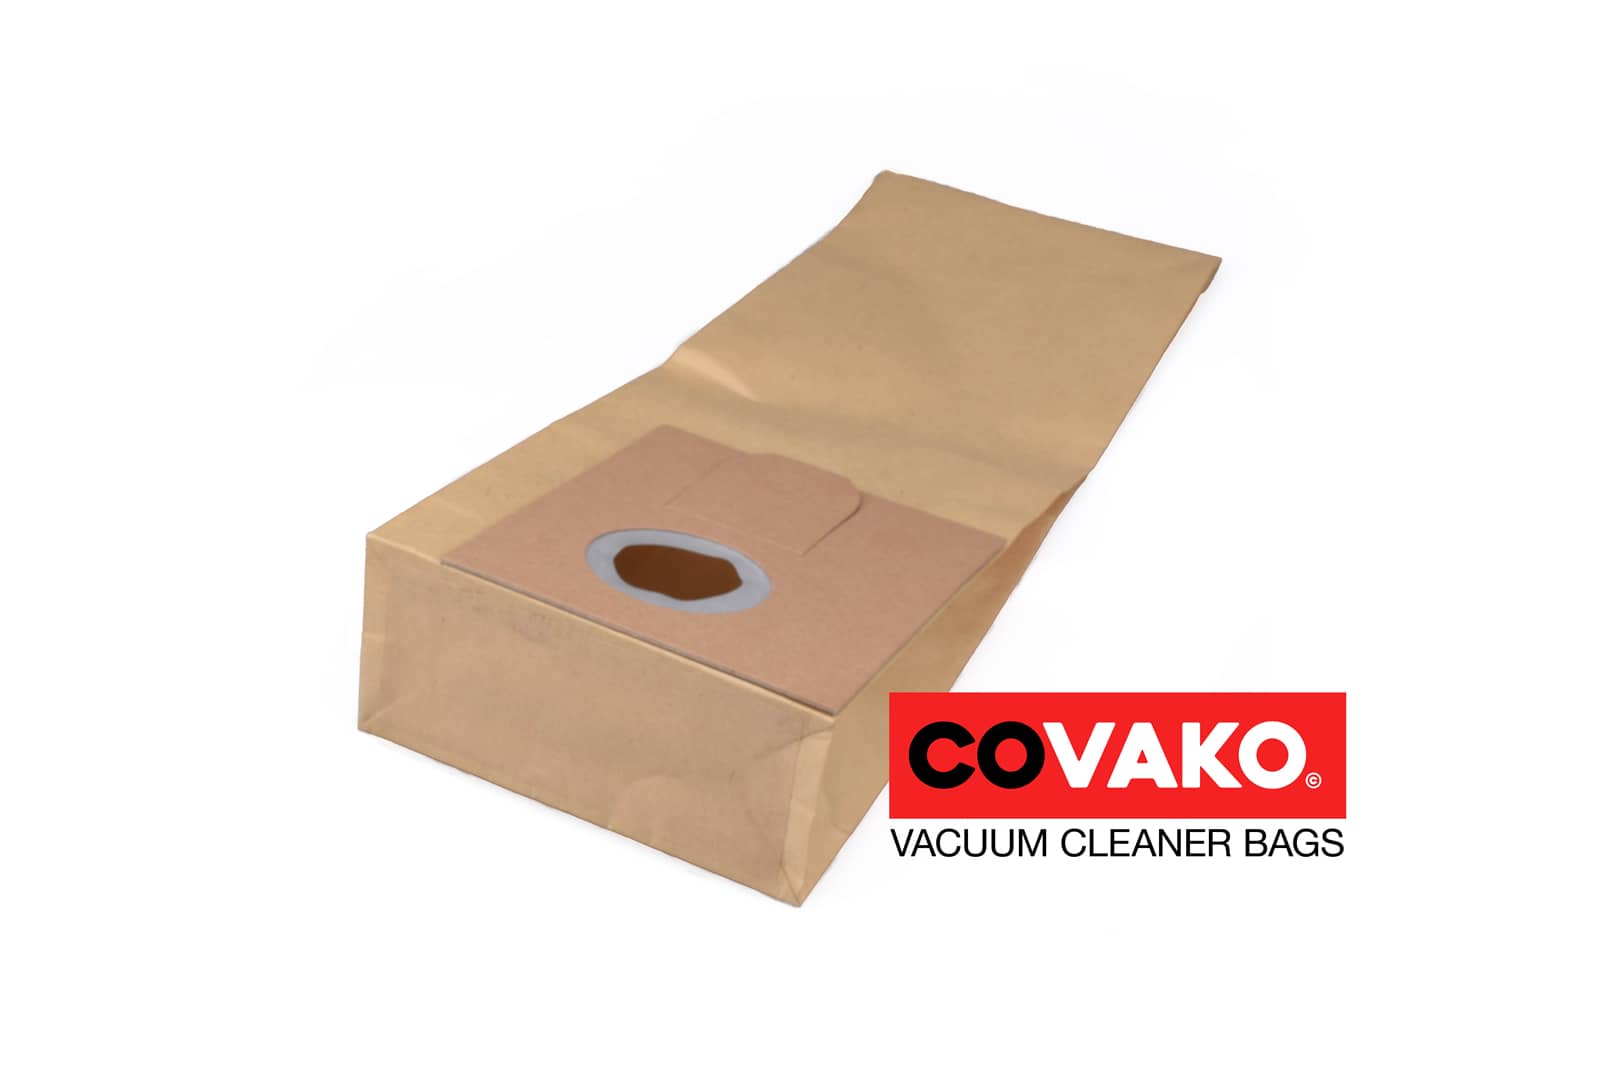 Clean a la Card BS 450 / Paper - Clean a la Card vacuum cleaner bags